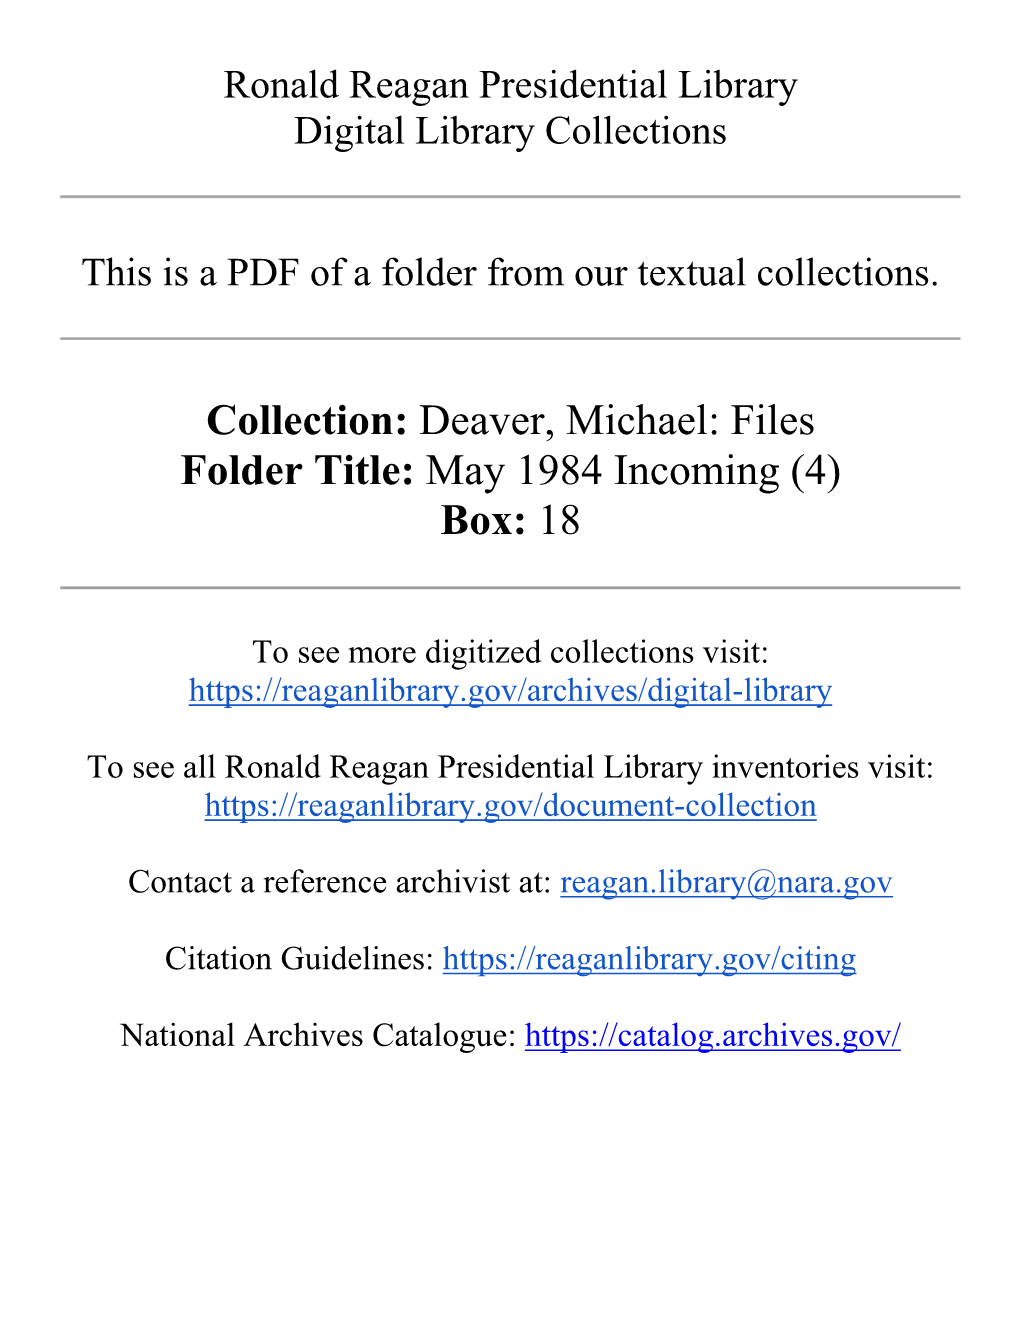 Deaver, Michael: Files Folder Title: May 1984 Incoming (4) Box: 18